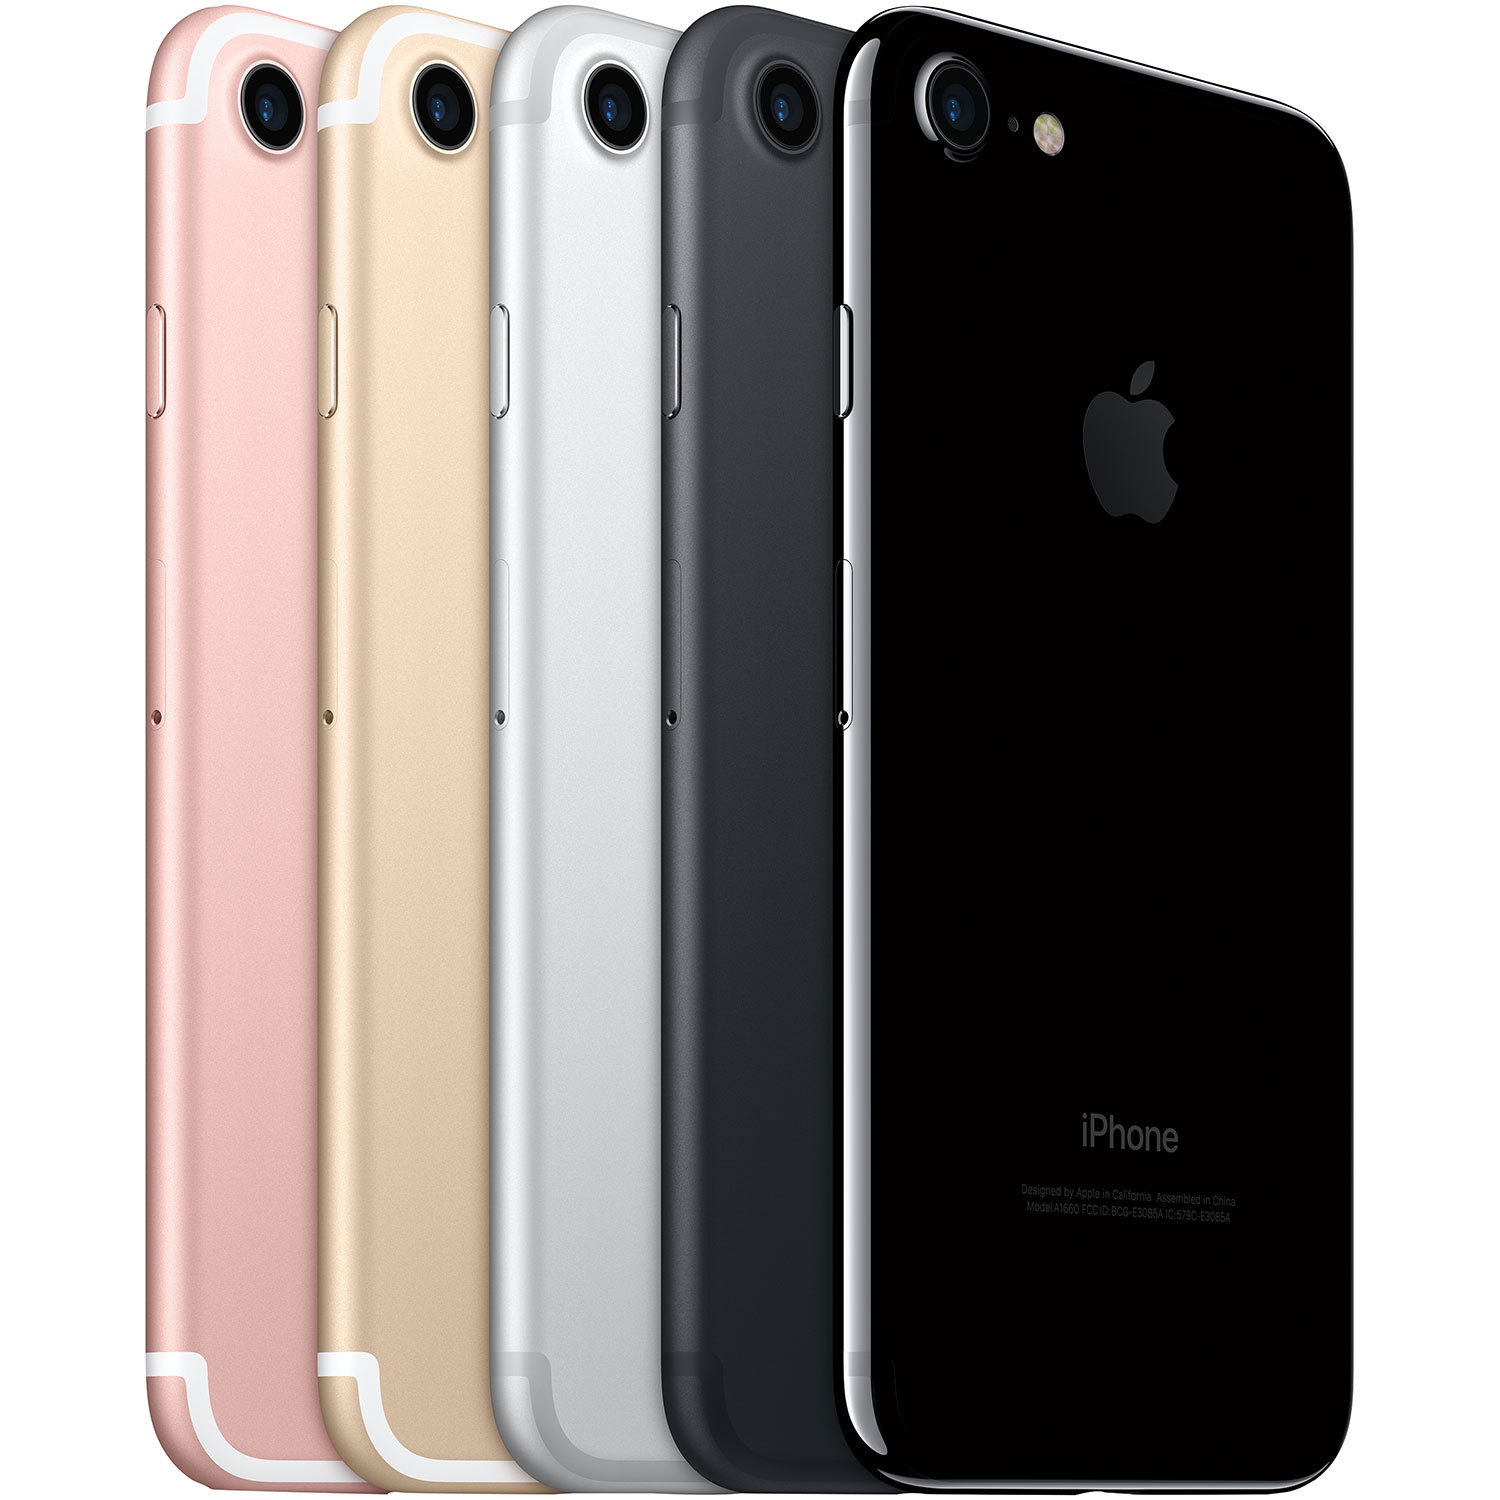 Refurbished (Excellent) - Apple iPhone 7 128GB Smartphone - Black -  Unlocked - Certified Refurbished